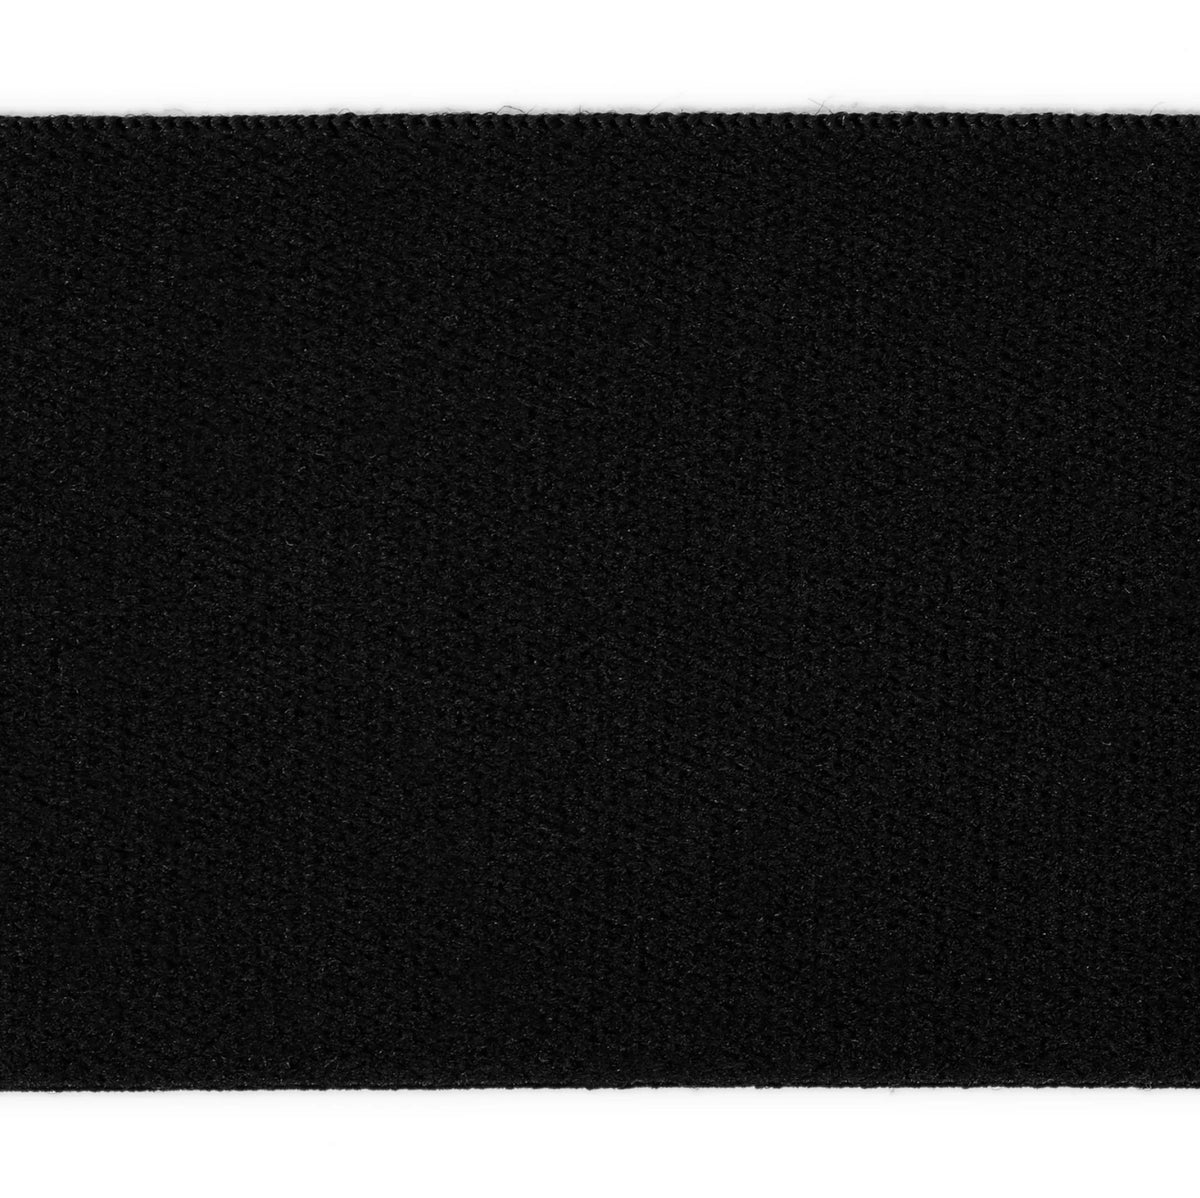 Black Soft Waistband Elastic (1.5 in x 2 yds) -- Ref. 9577B -- by Drit ...